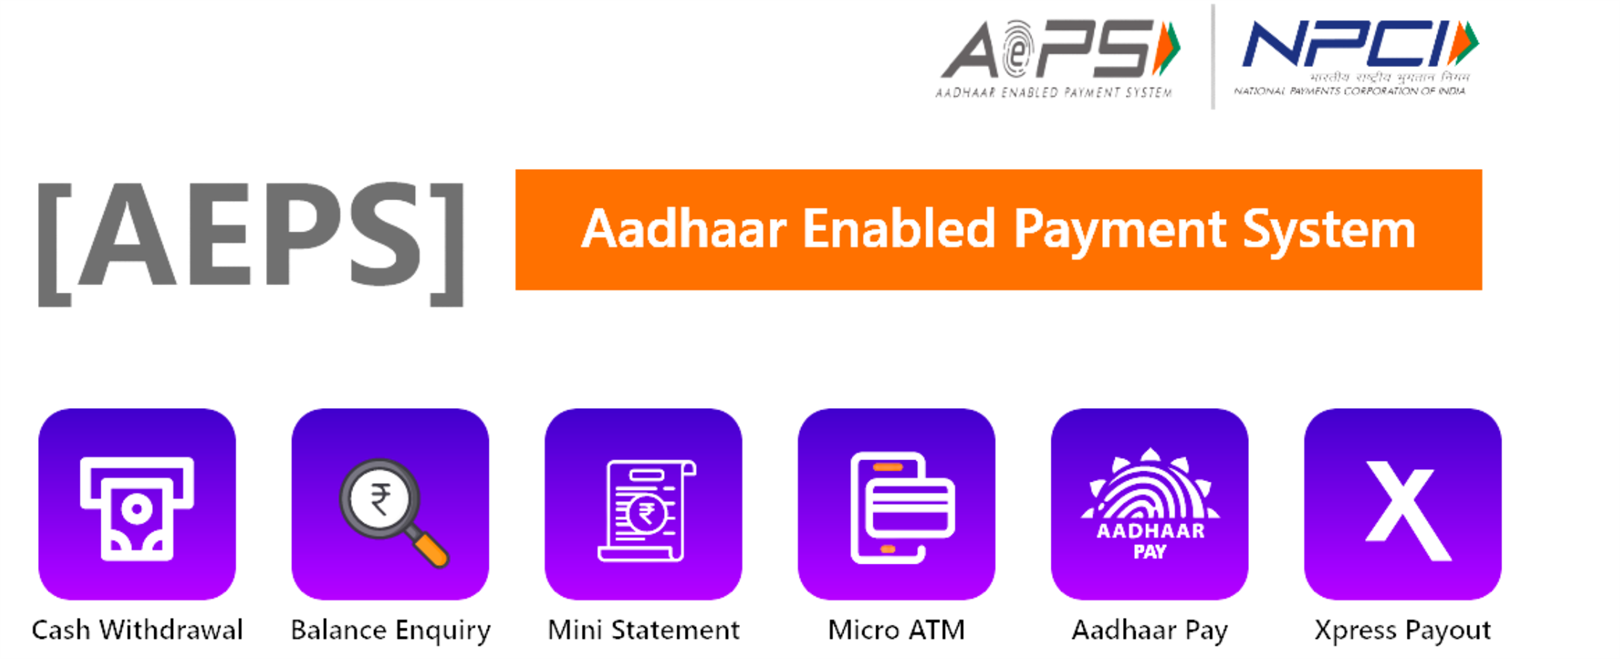 How to set up a UPI PIN using an Aadhaar Card - Airtel